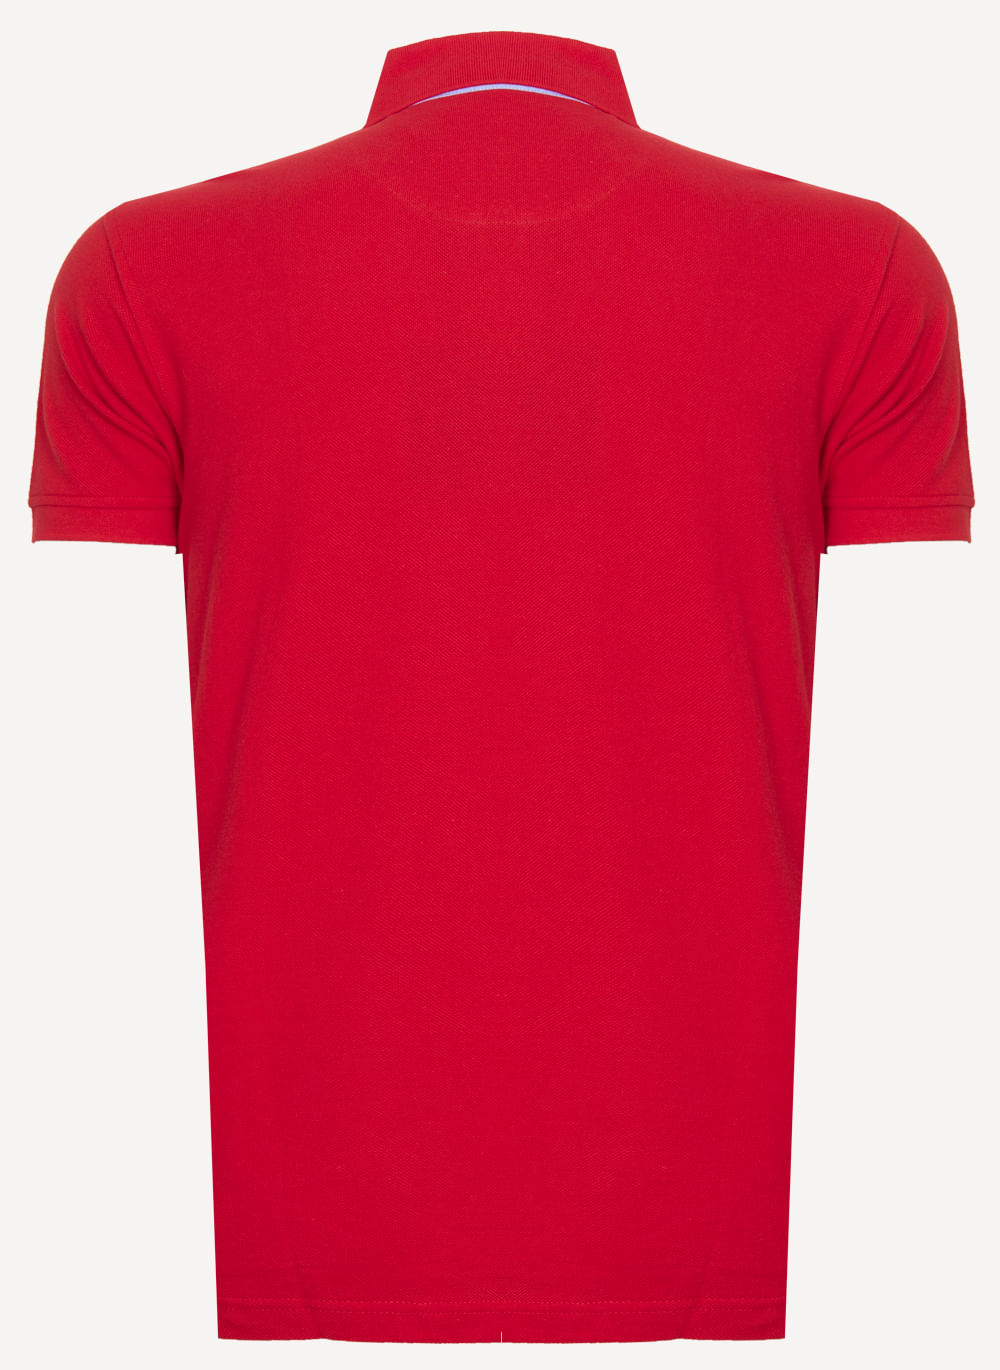 Camisa-Polo-Vermelha-Lisa-Aleatory-Vermelho-P